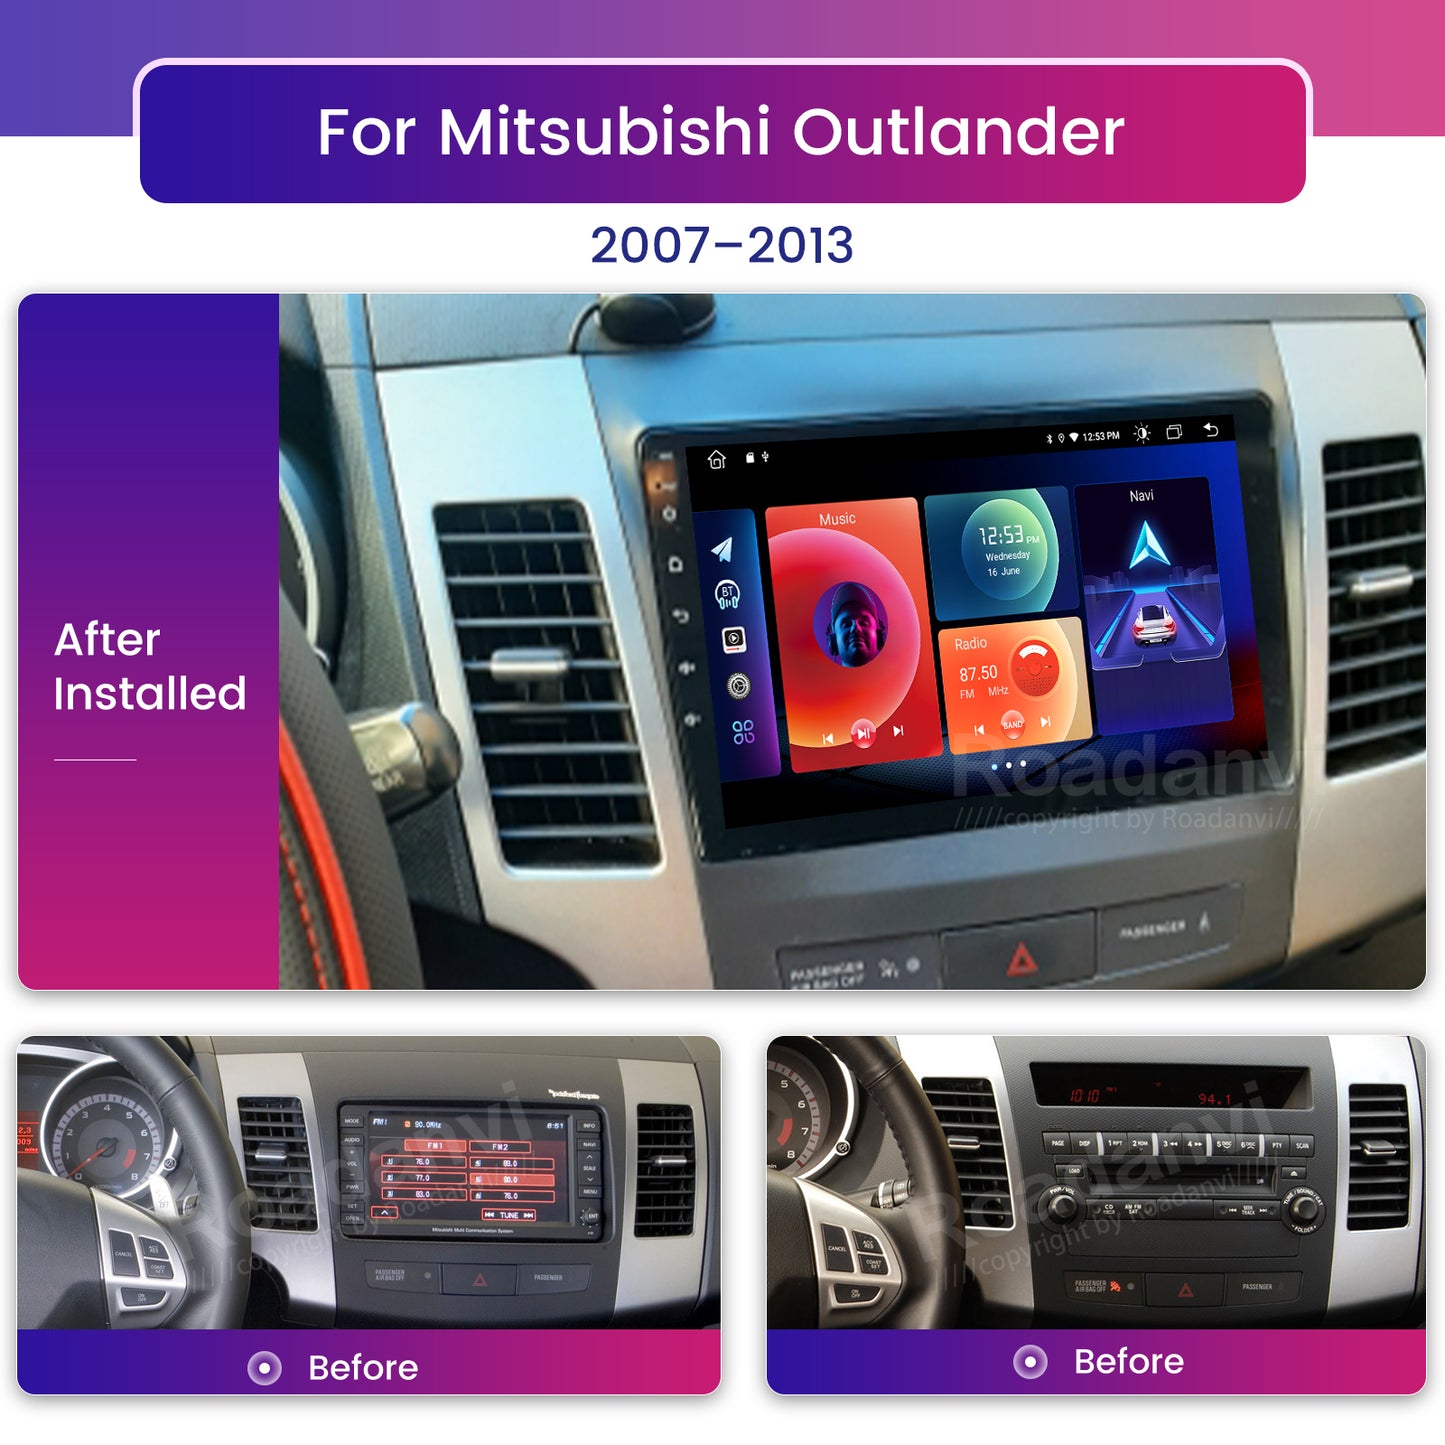 Roadanvi F10 for Mitsubishi Outlander 2007 2008 2009 2010 2011 2012 2013 Car GPS Navigation AI Voice Control Apple Carplay Android Auto 4G 64G DSP Stereo